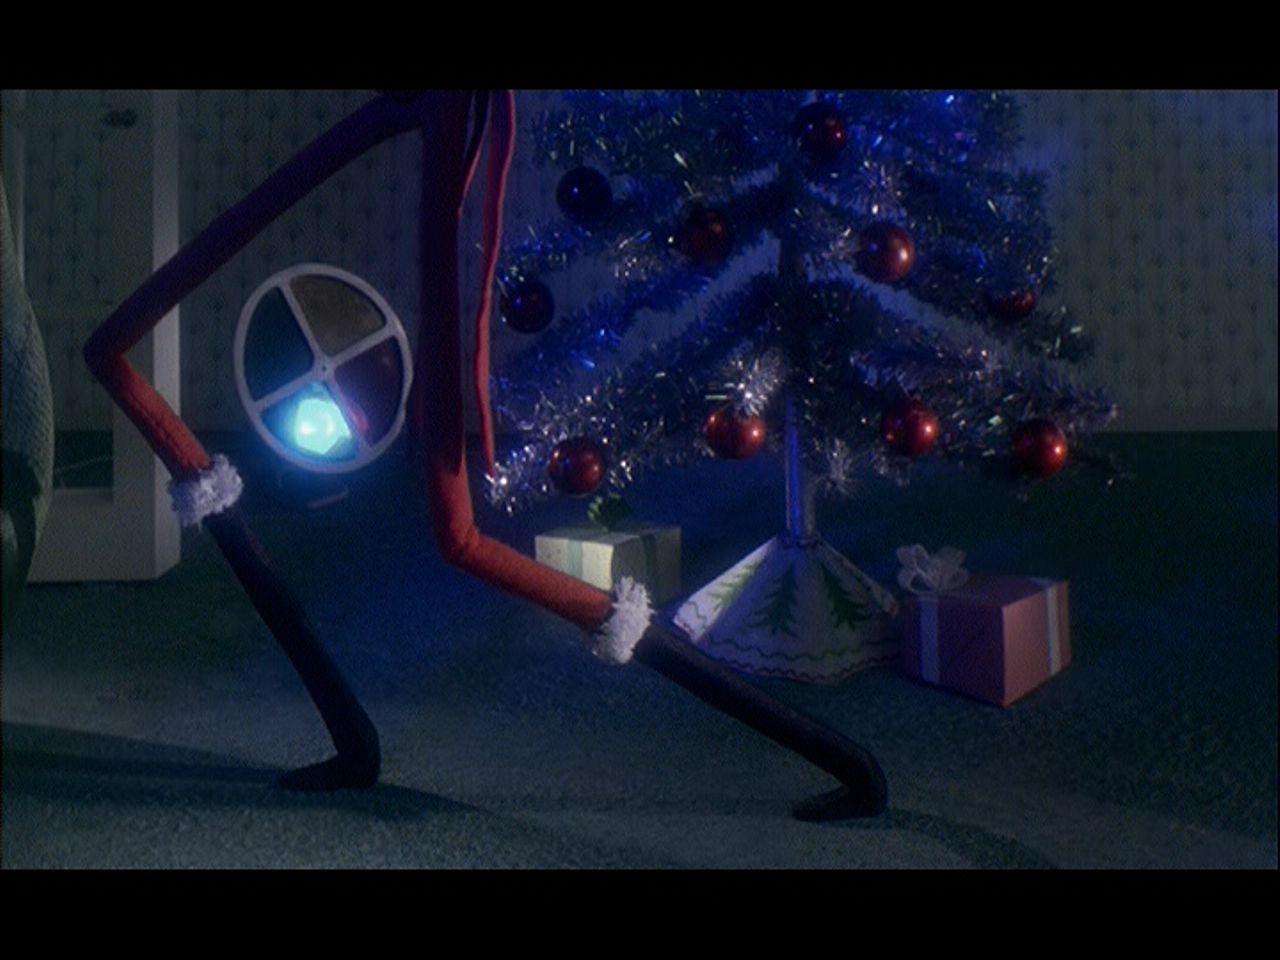 The Nightmare Before Christmas - Nightmare Before Christmas Image (3011944) - Fanpop